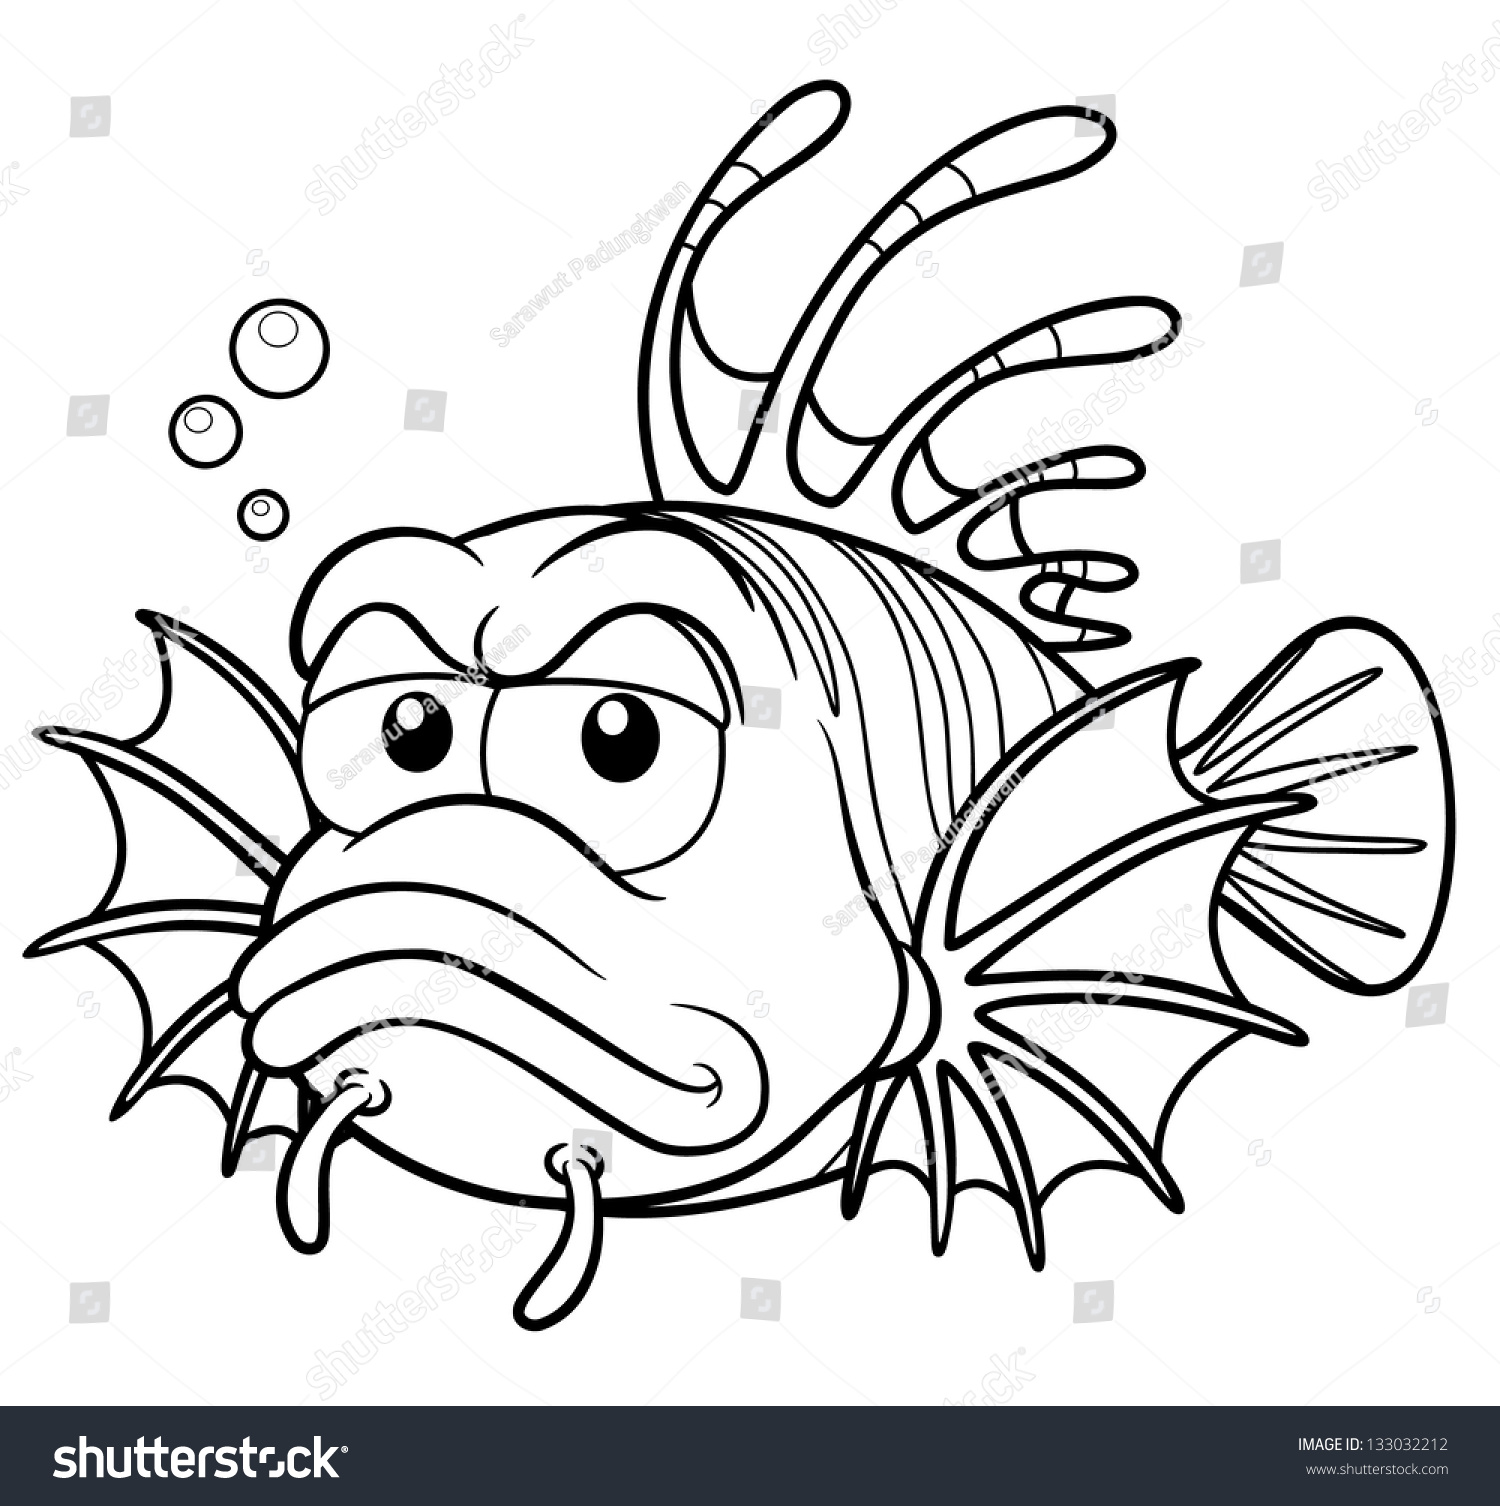 Download Vector Illustration Lionfish Cartoon Coloring Book Stock ...